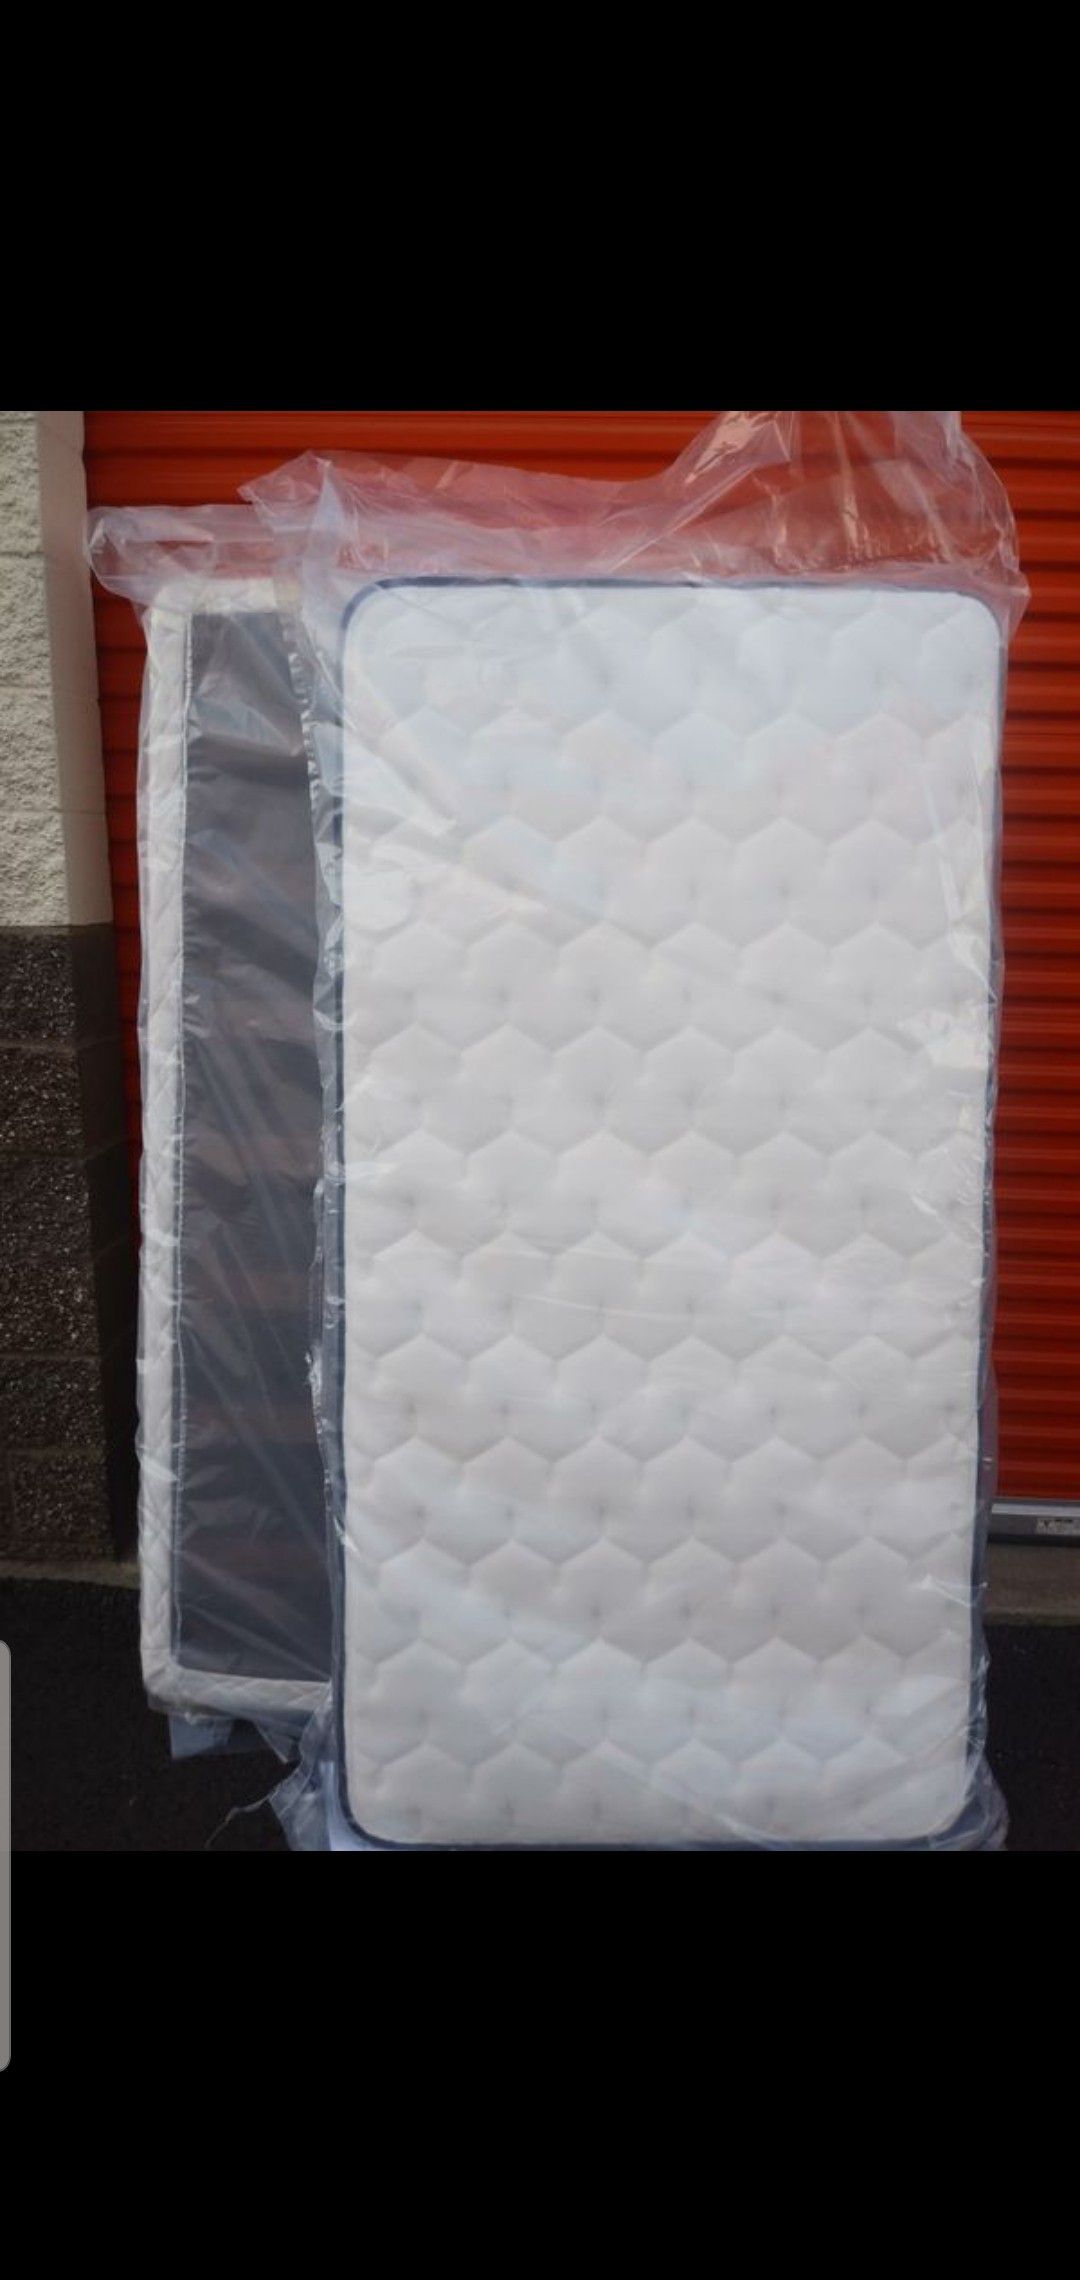 Twin size mattress and boxpring